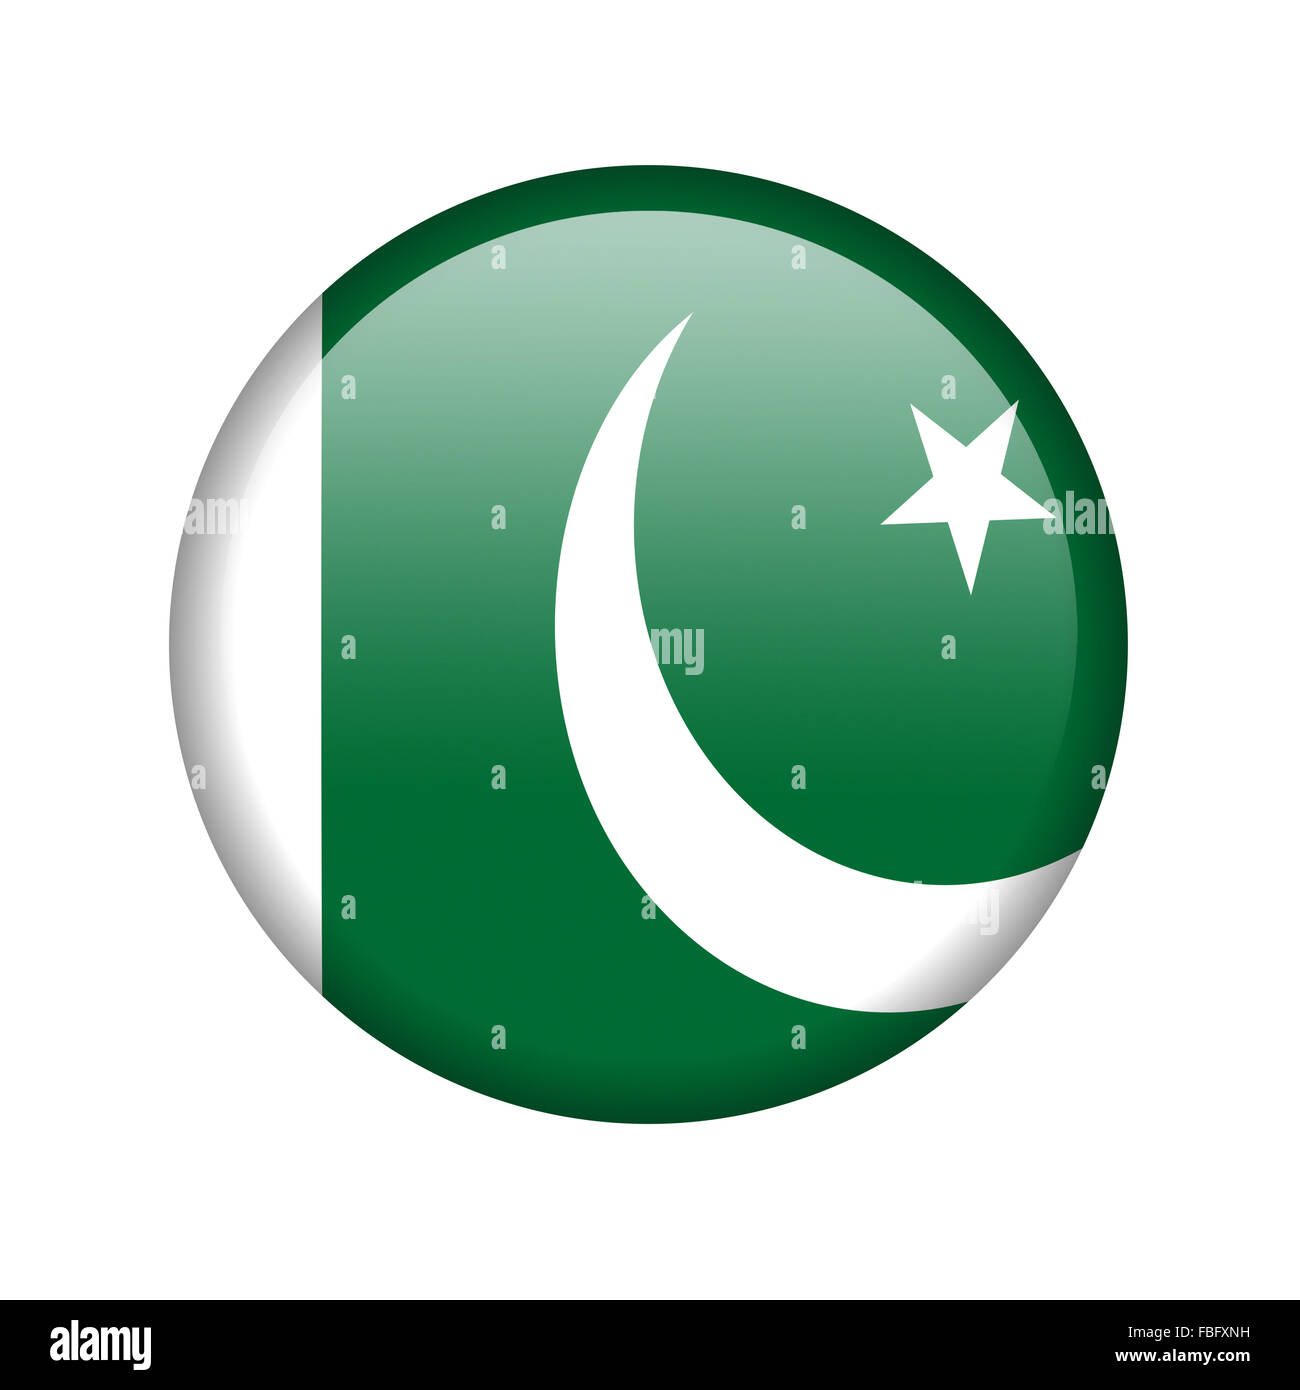 The Pakistani flag Stock Photo